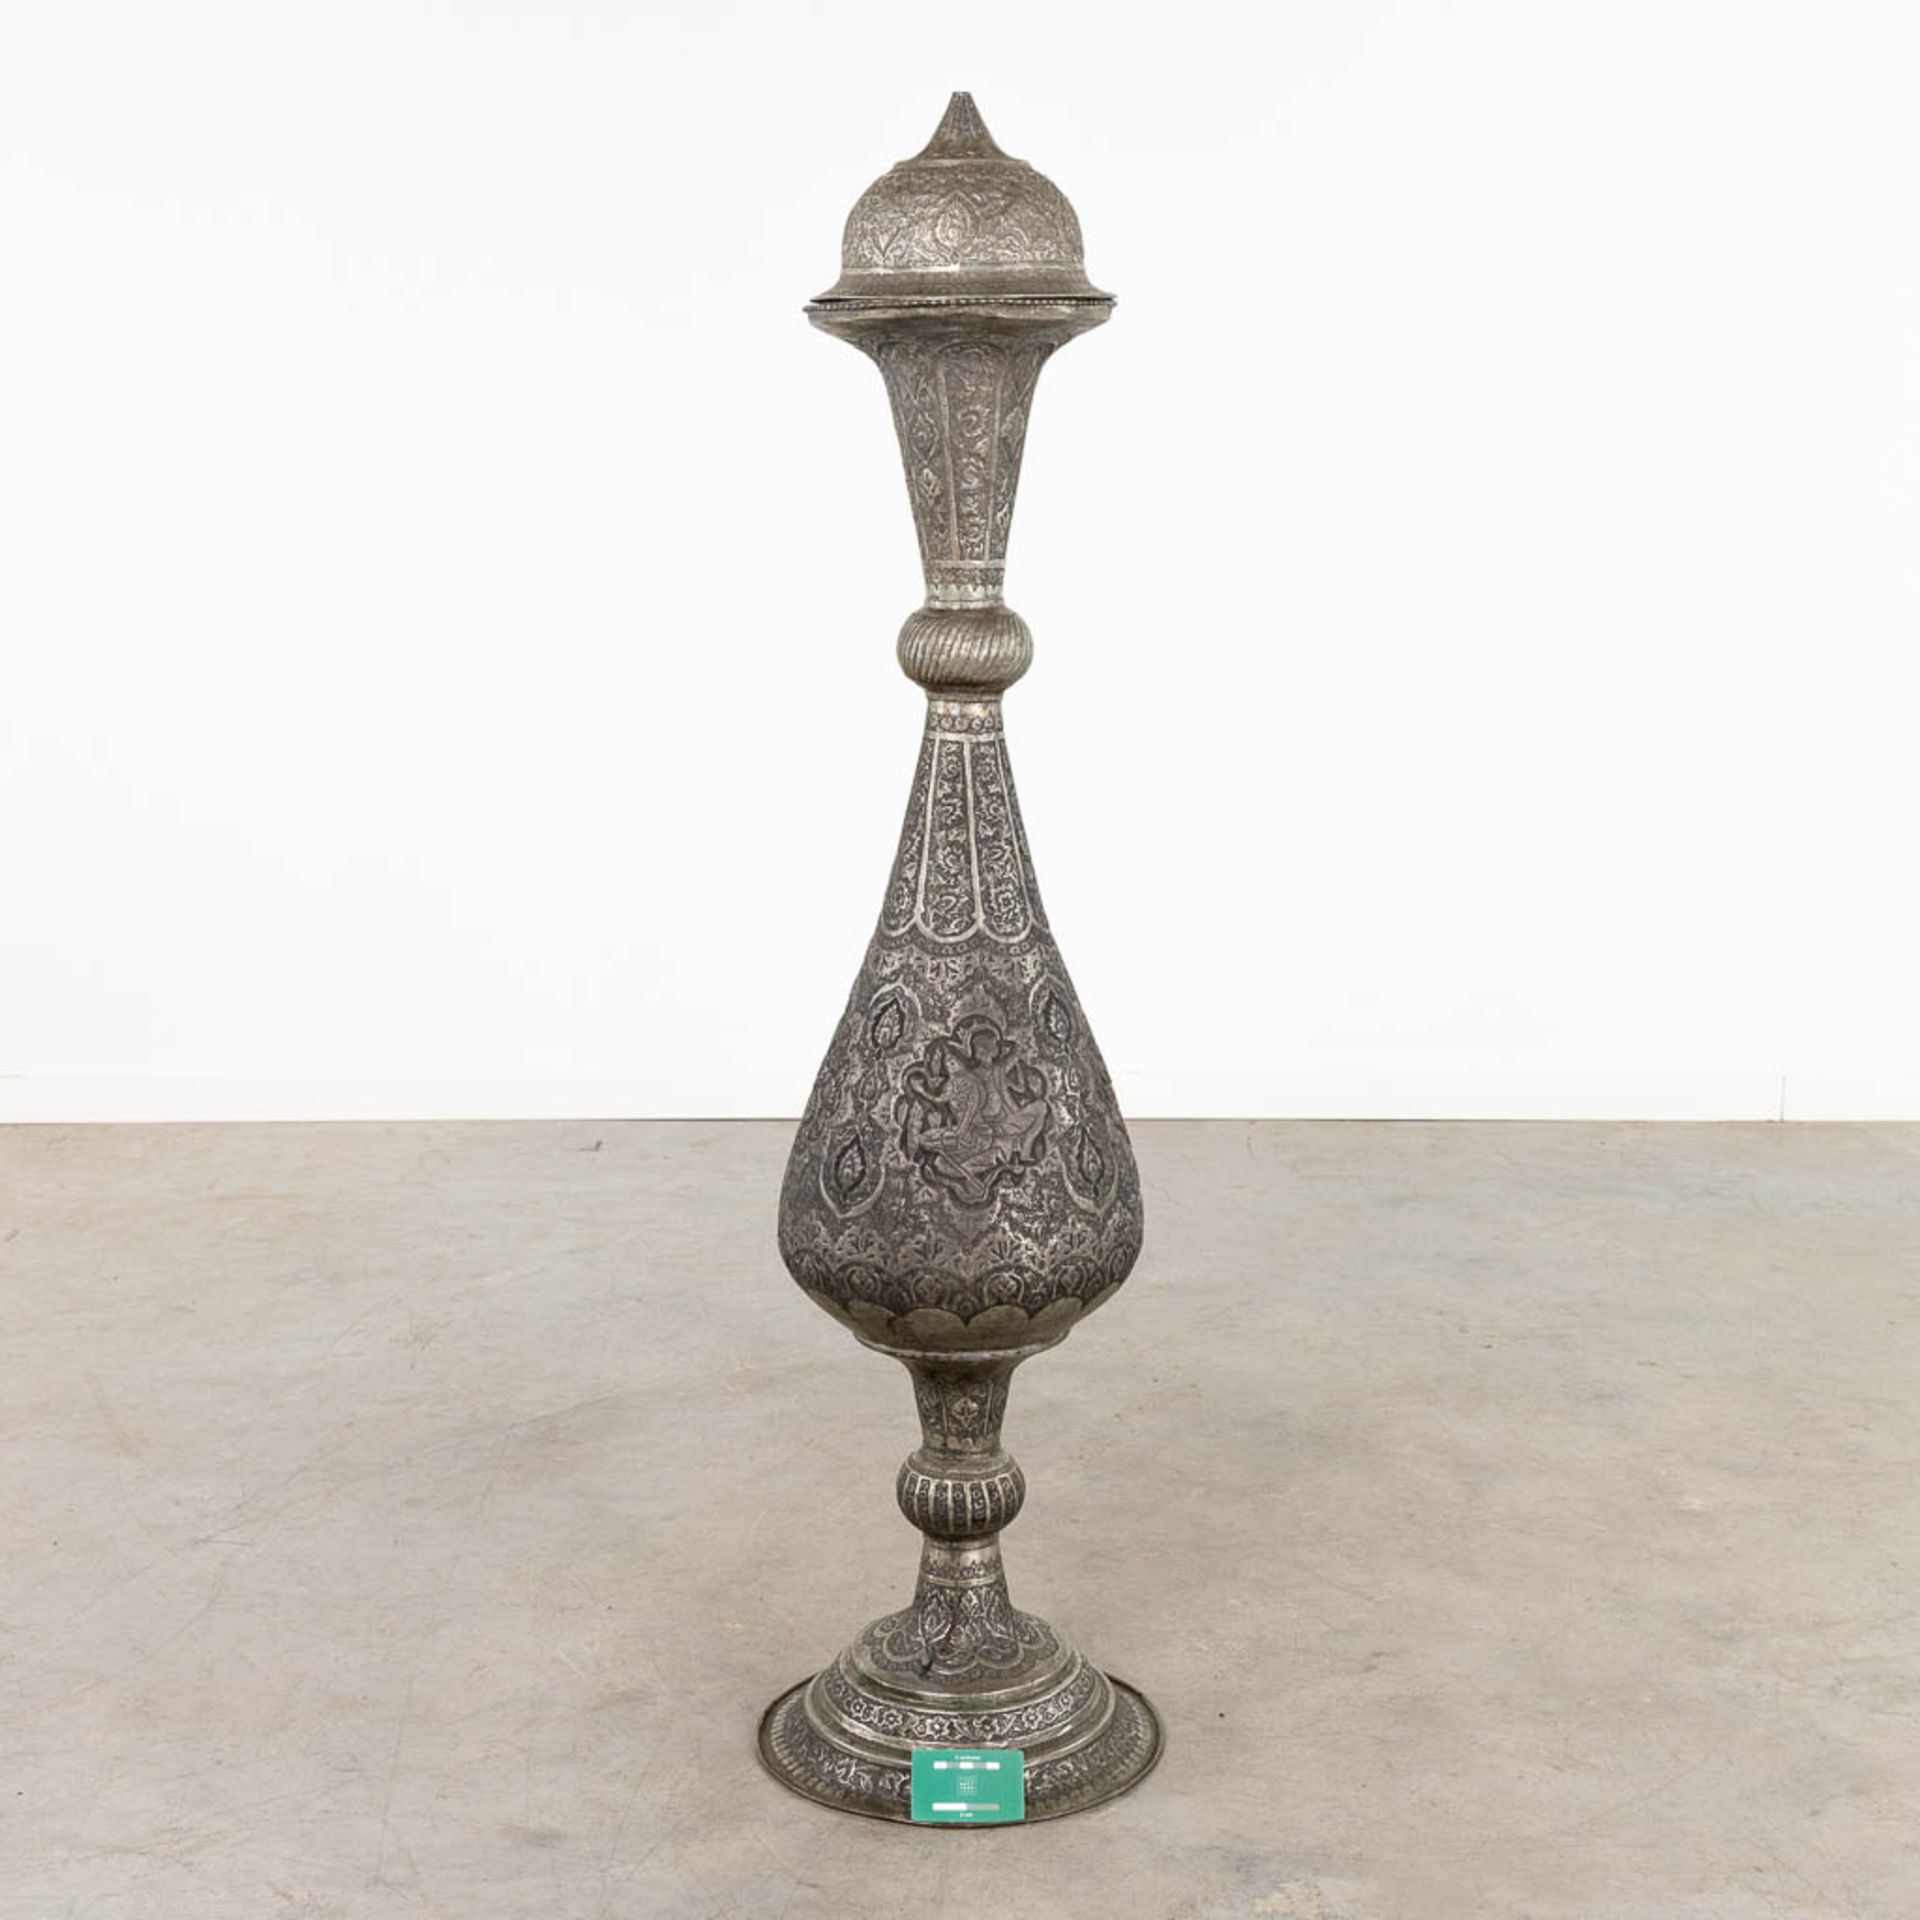 A large decorative vase, India. 19th C. (H:128 x D:32 cm) - Image 2 of 14